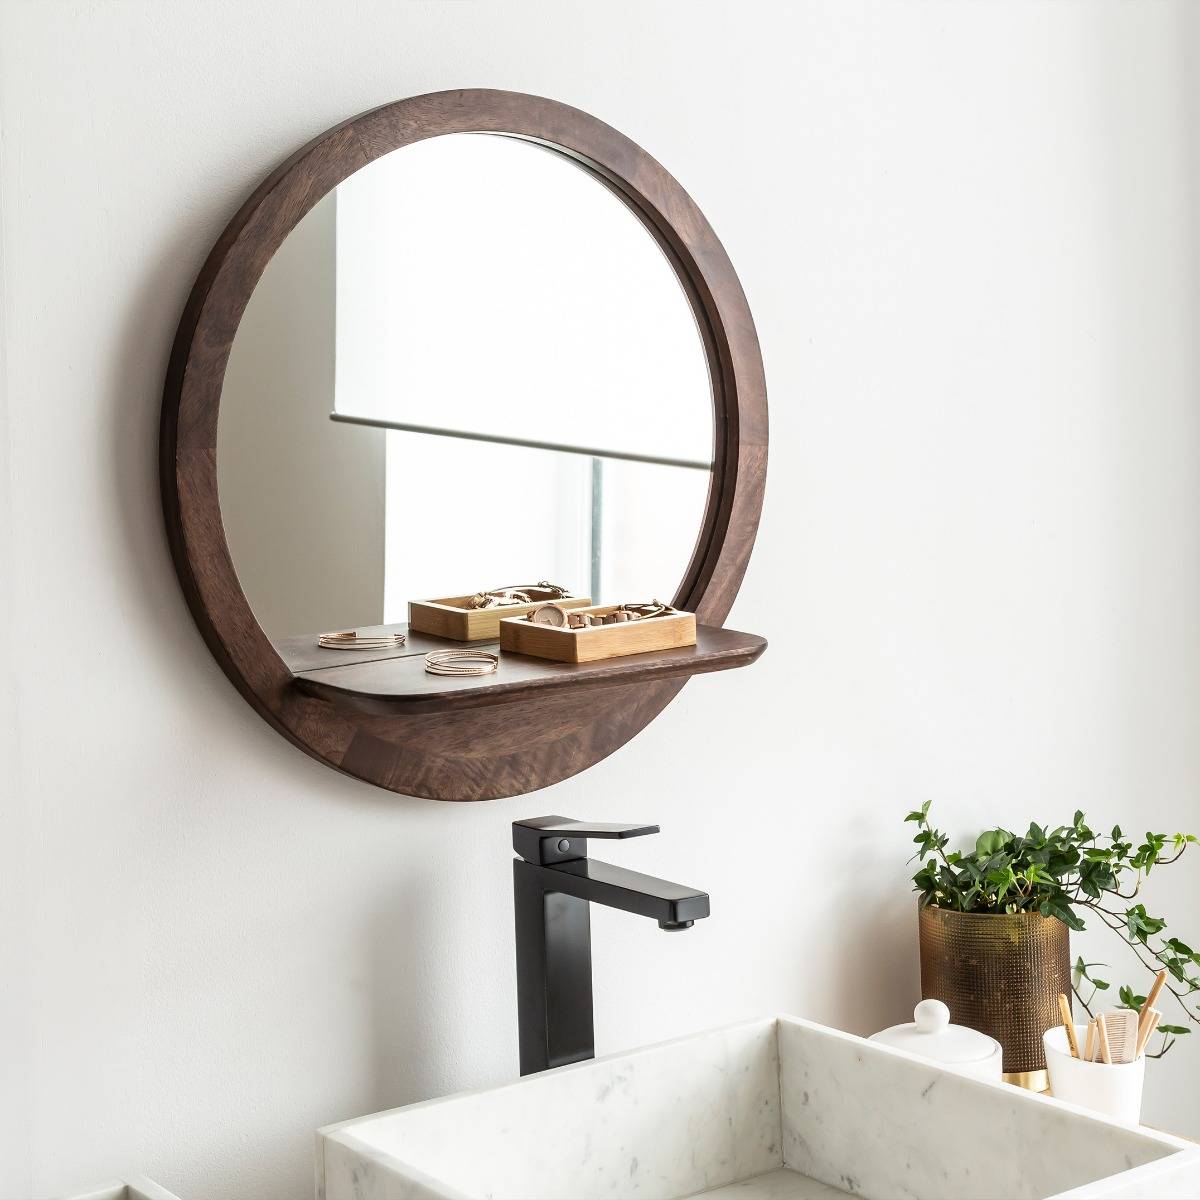 Miroir rond avec étagère en bois Marley